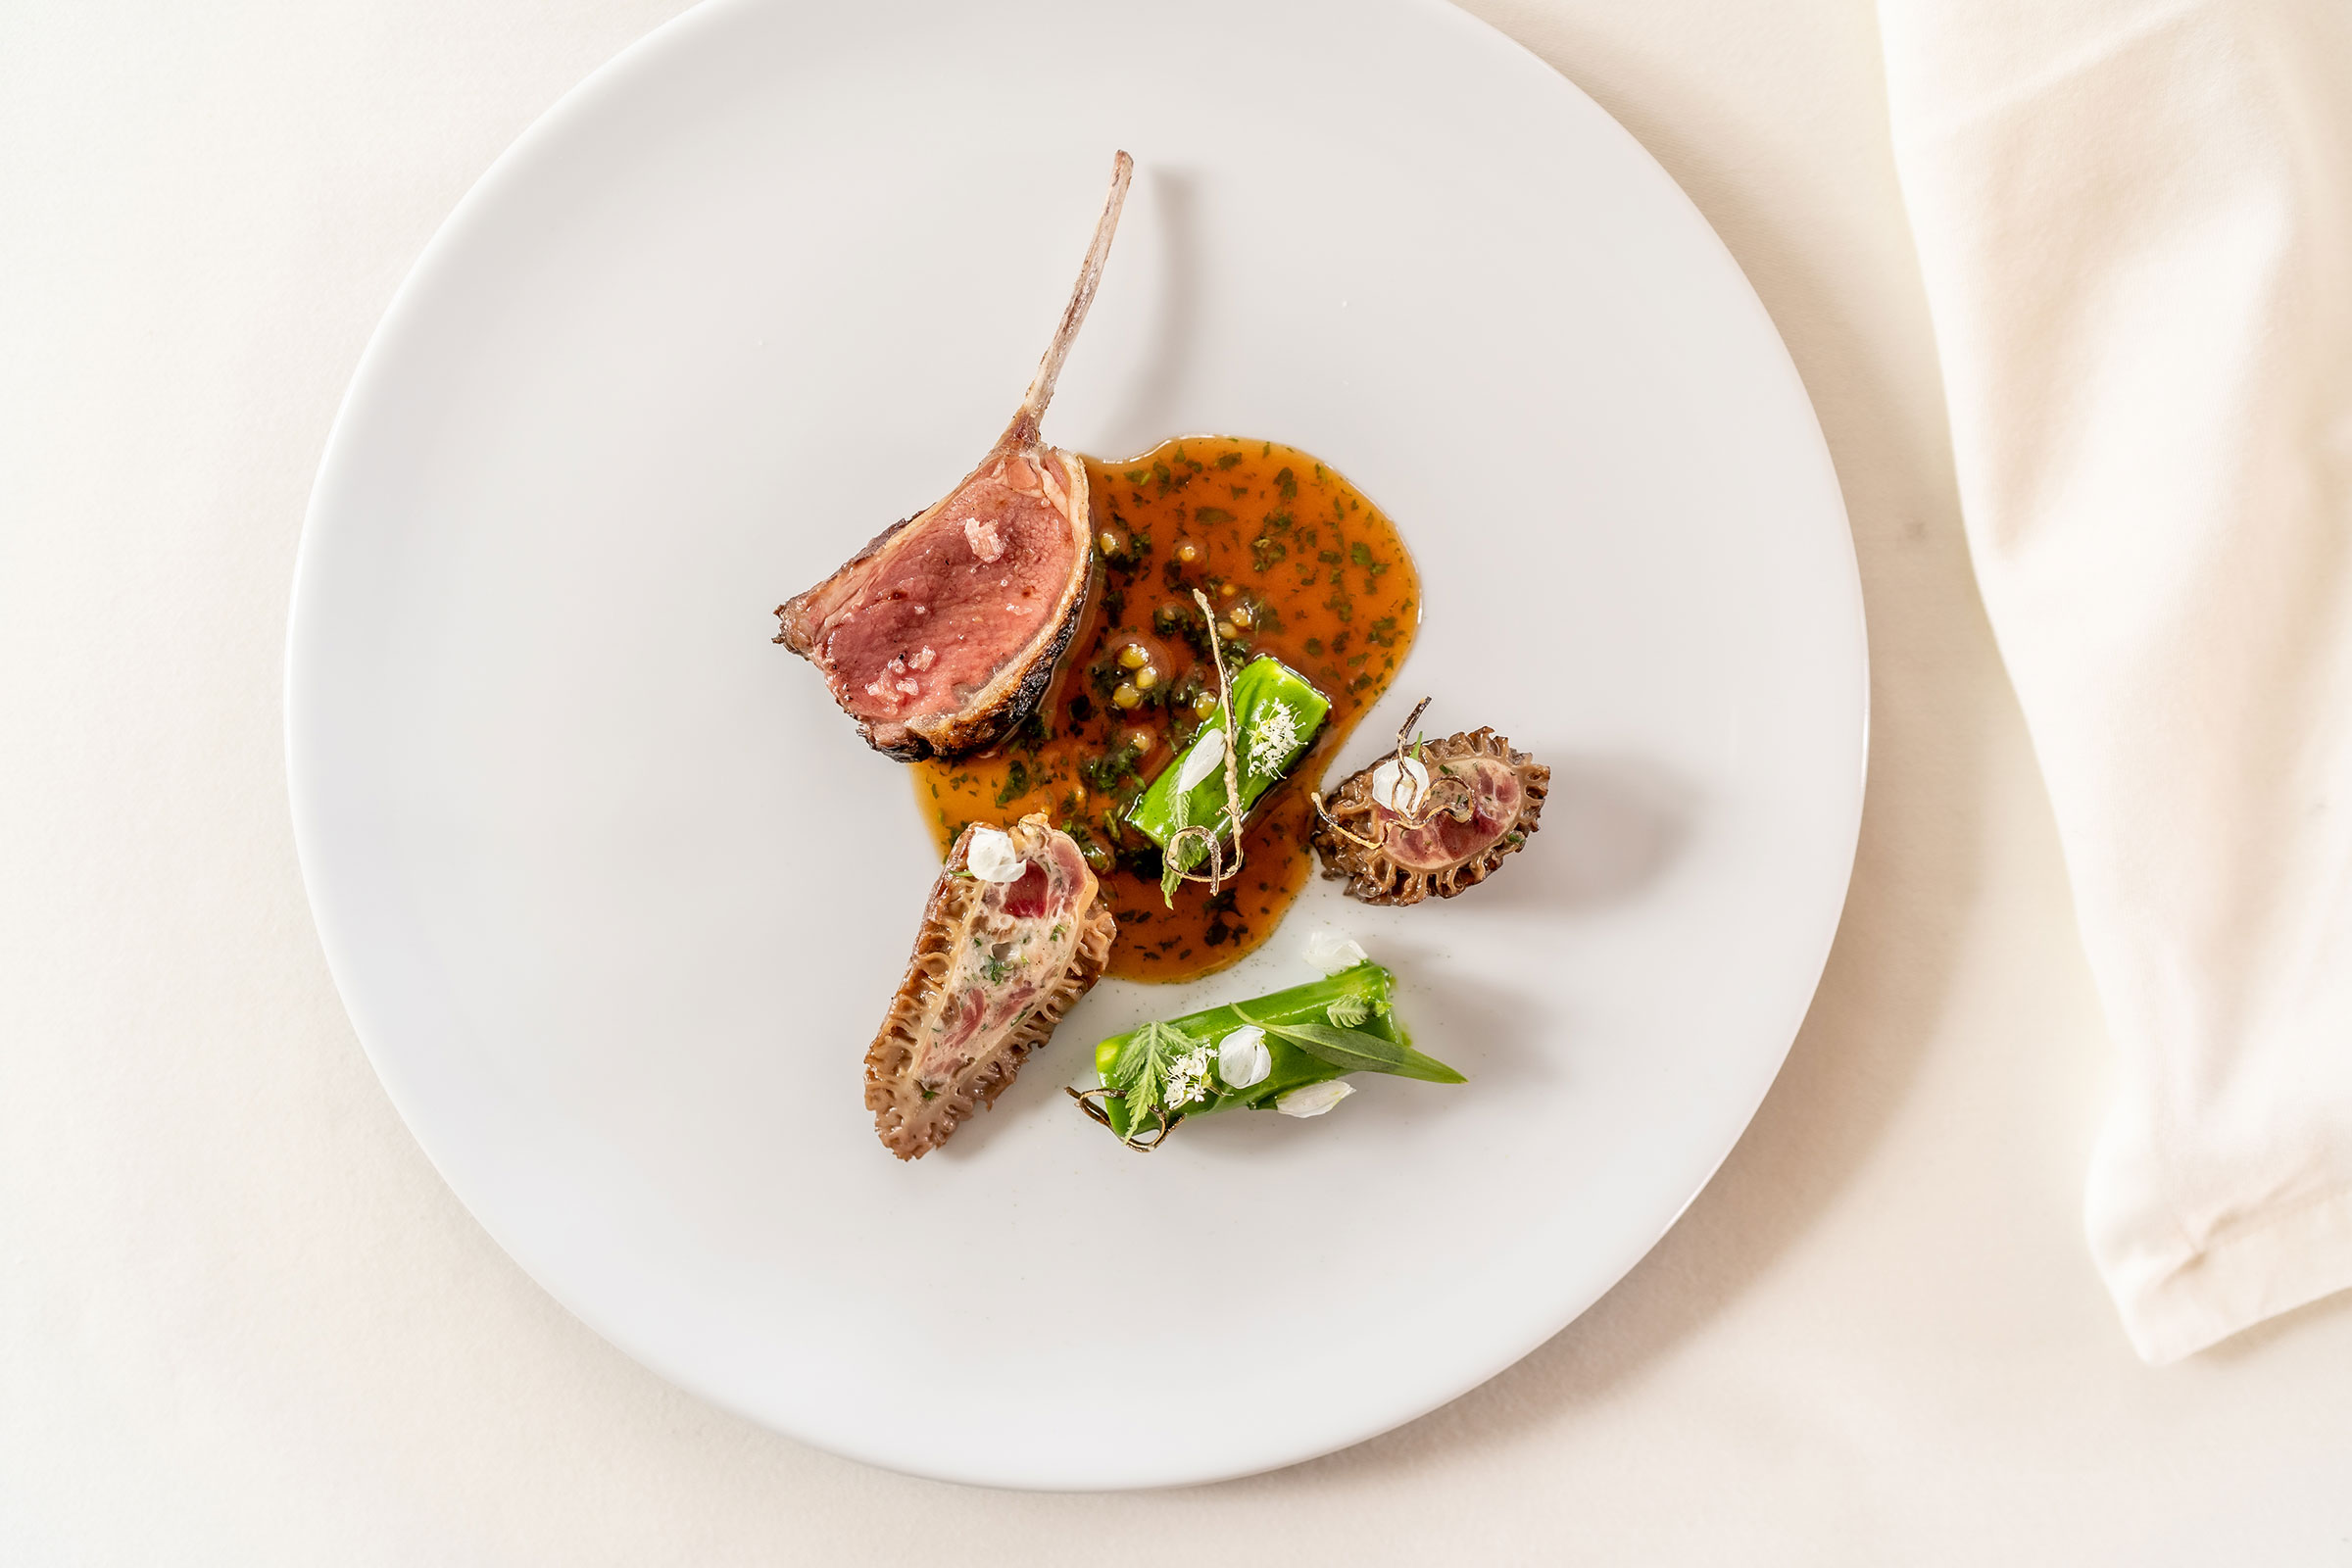 The North Ronaldsay Mutton dish served at The Glenturret's Lalique restaurant. (Courtesy Marc Millar—The Glenturret)